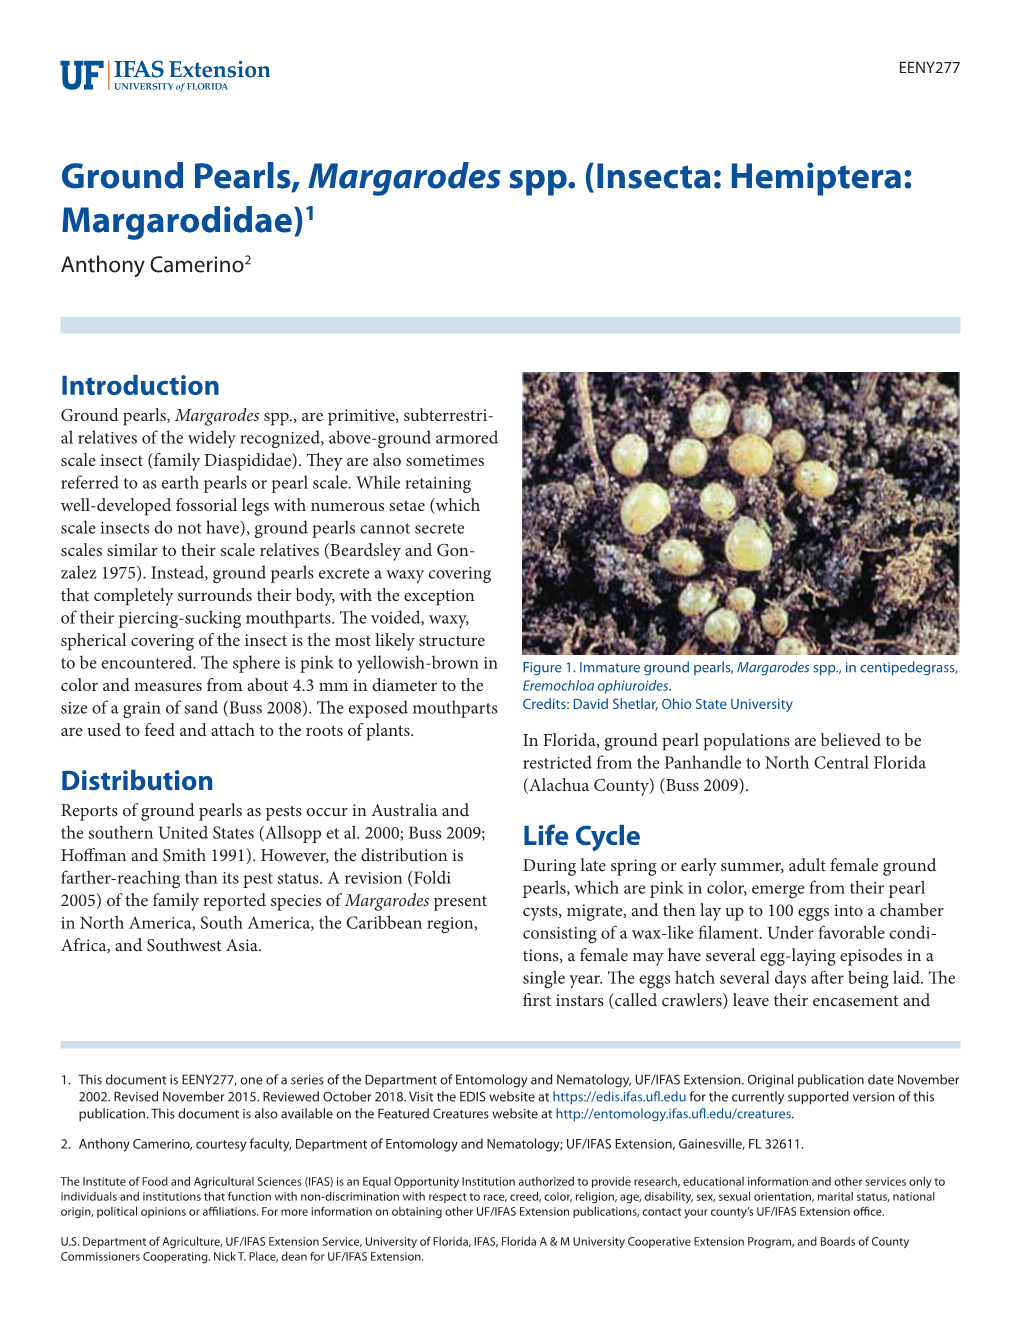 Ground Pearls, Margarodes Spp. (Insecta: Hemiptera: Margarodidae)1 Anthony Camerino2